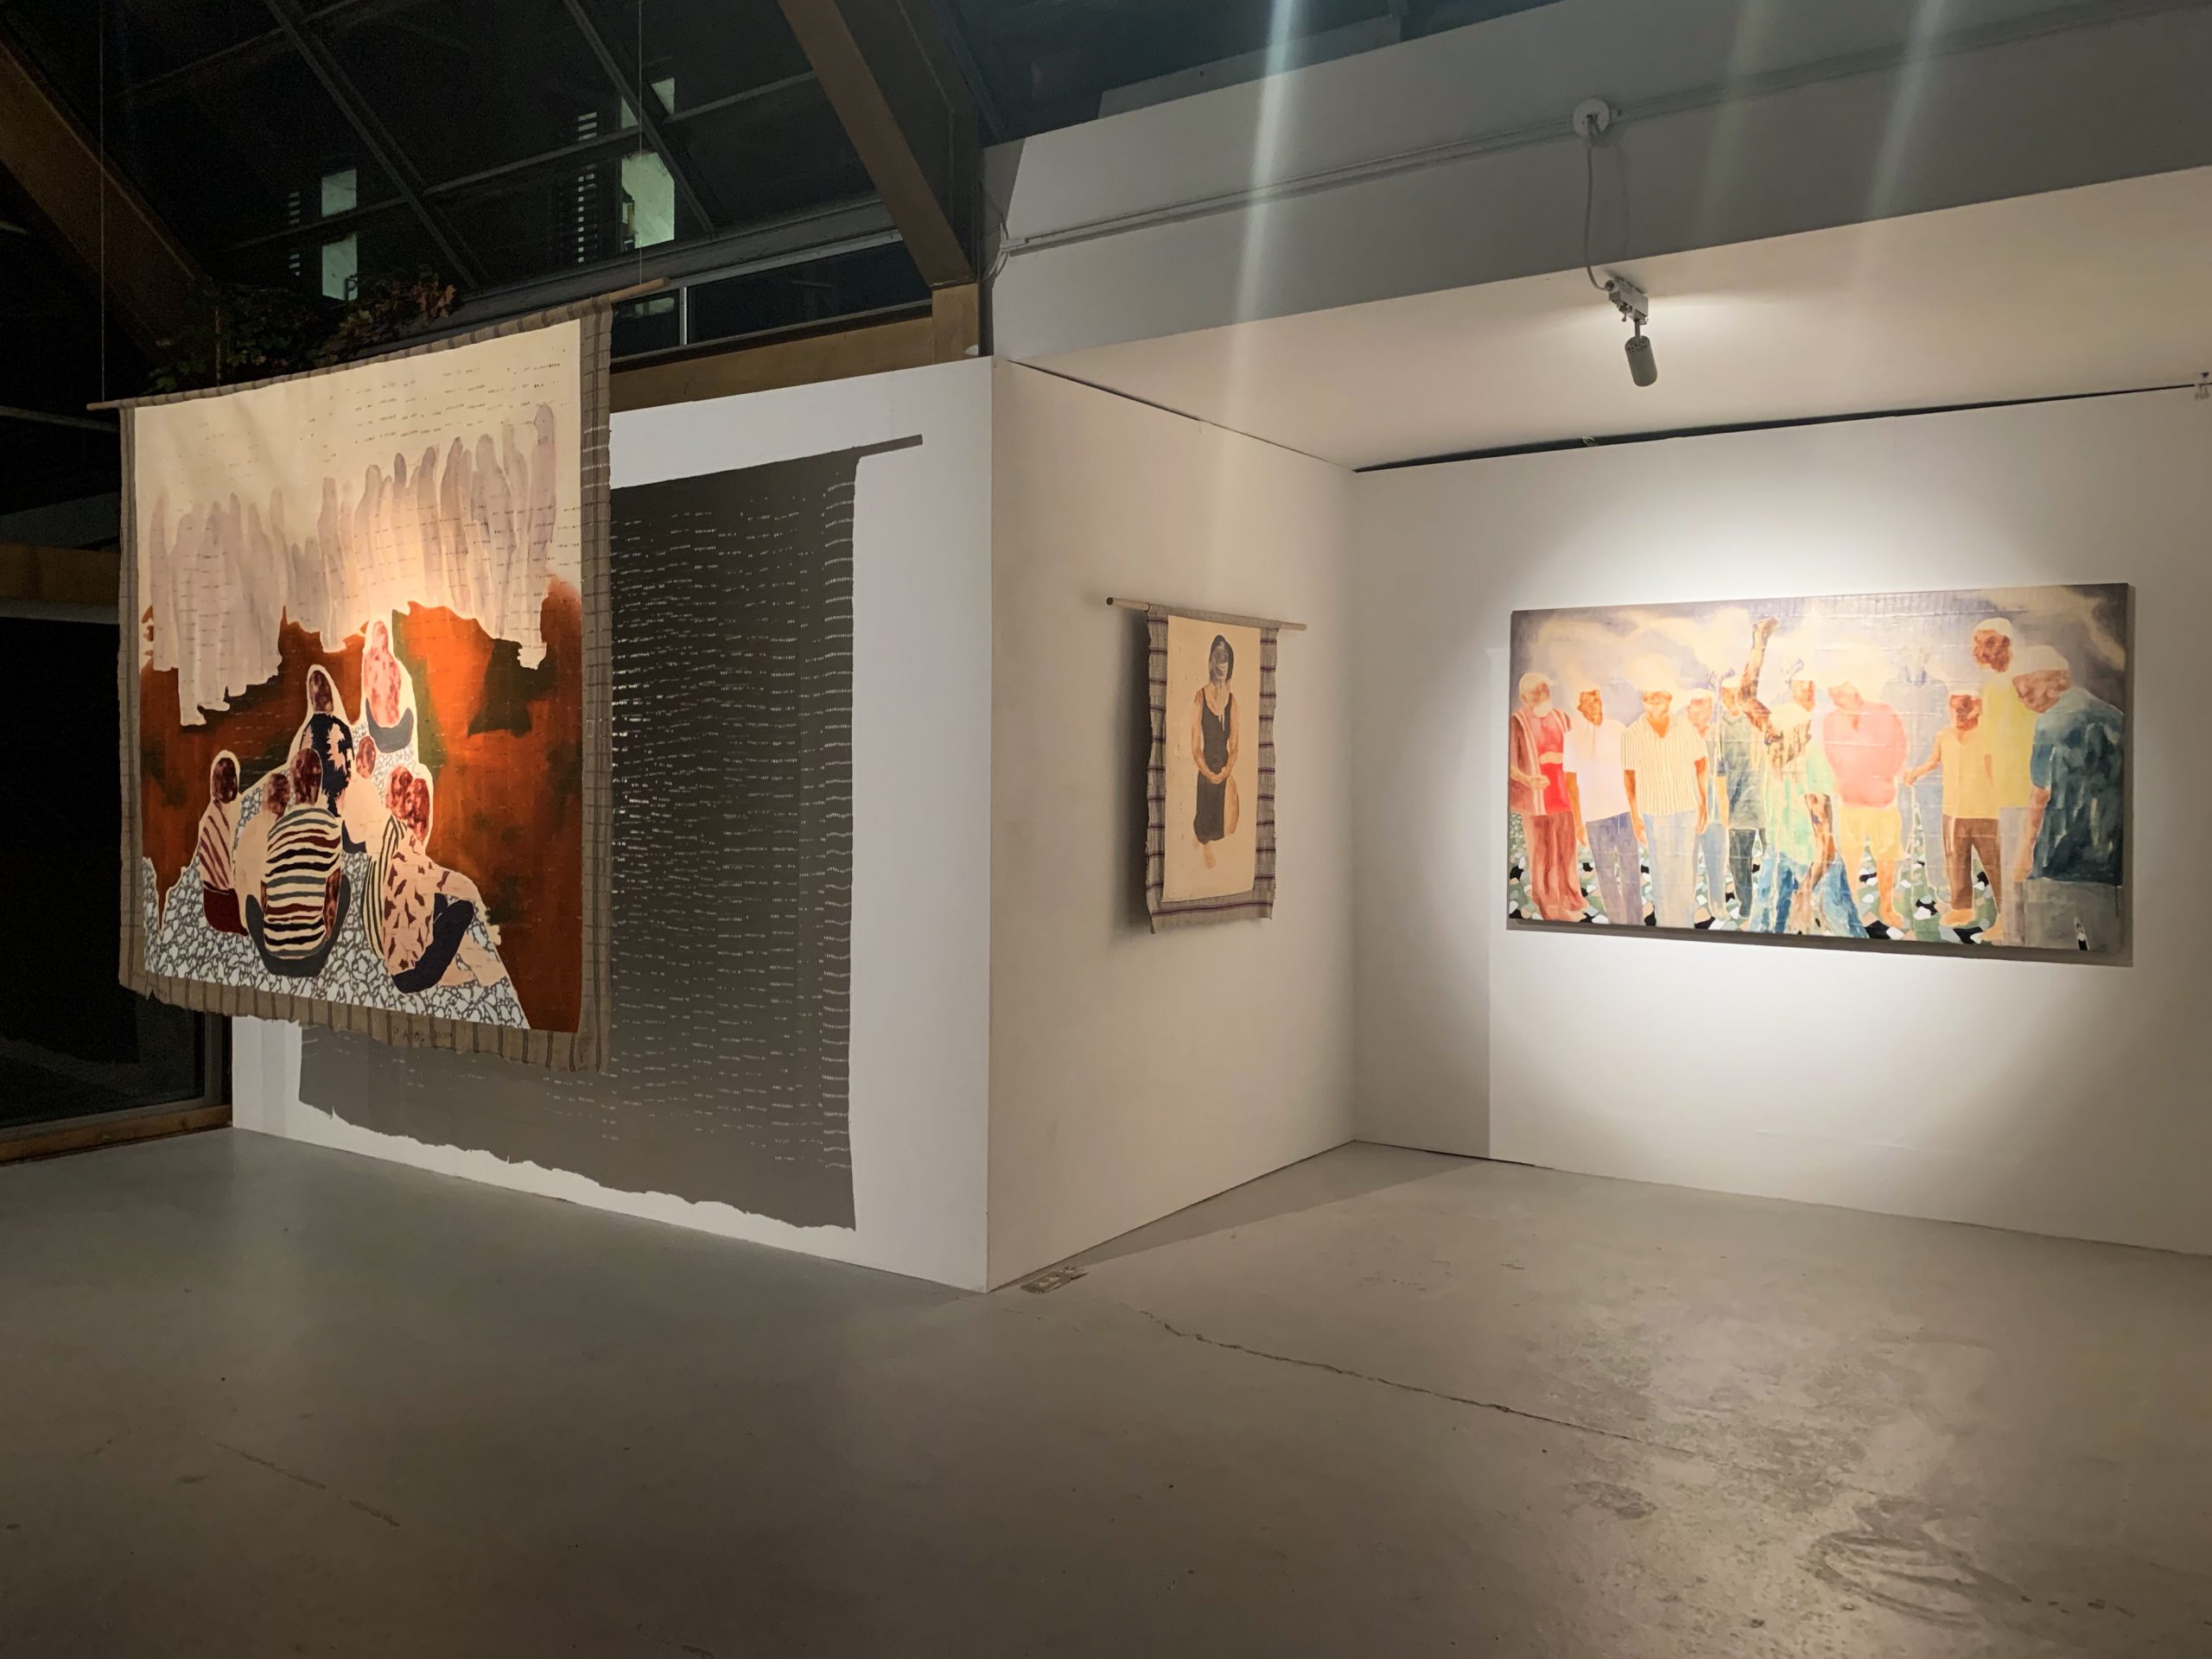 Installation view of Nengi Omuku's solo exhibition "Gathering" at Kristin Hjiellegjerde Gallery, London.